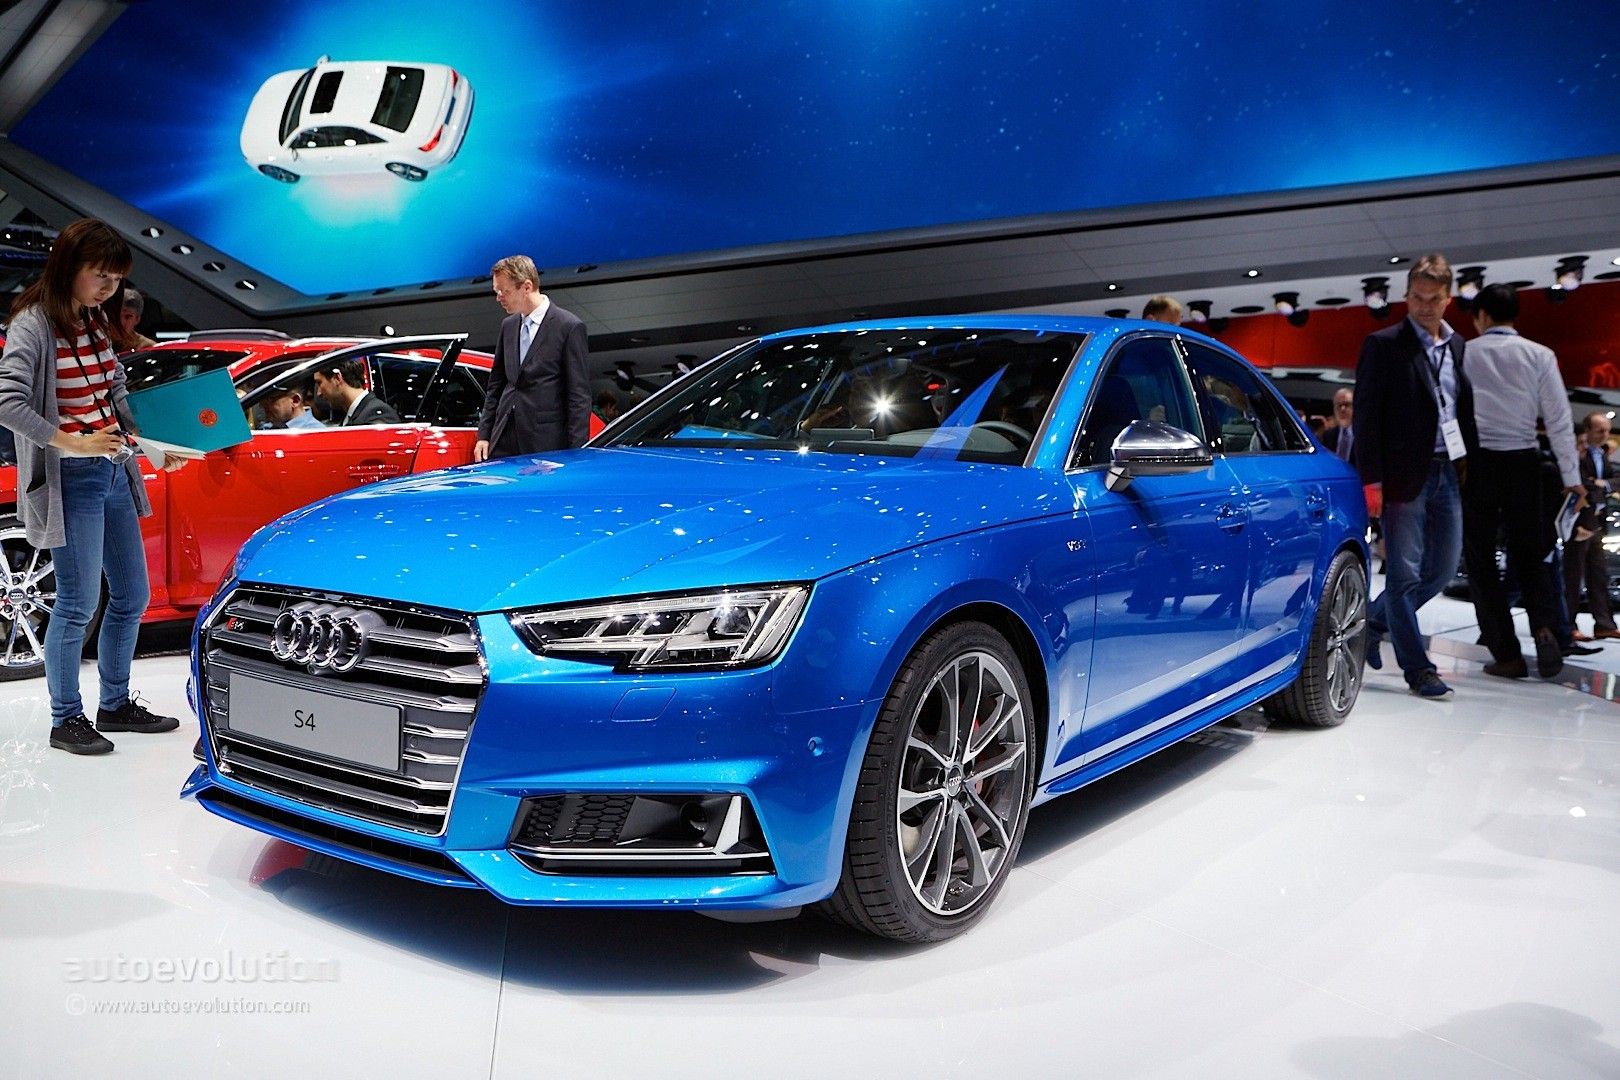 2015 Frankfurt Motor Show: Audi Reveals all-new S4